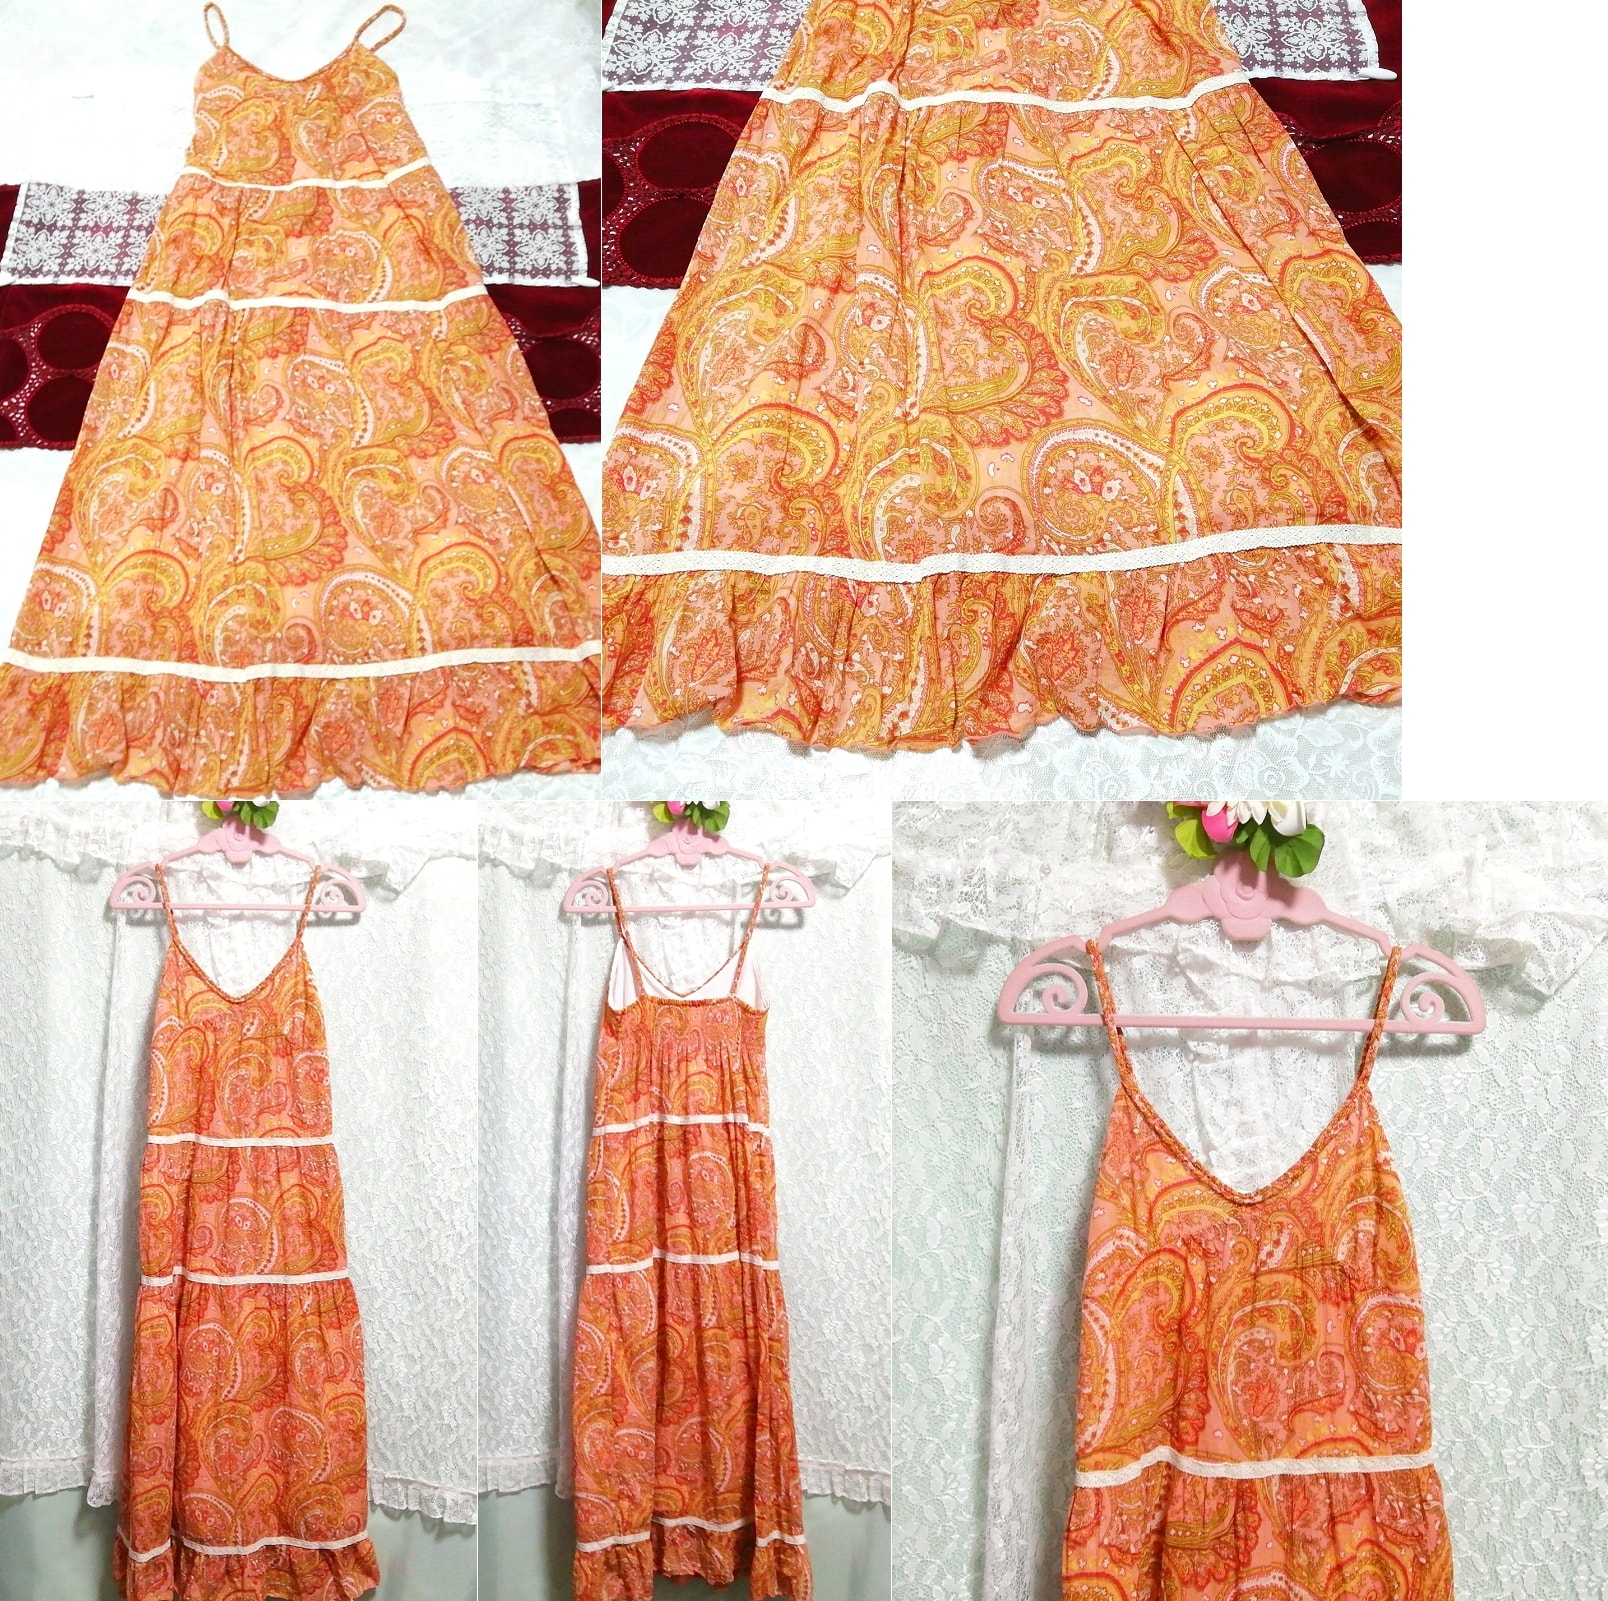 Orange orange ethnic pattern cotton negligee nightgown camisole skirt maxi dress, long skirt, m size